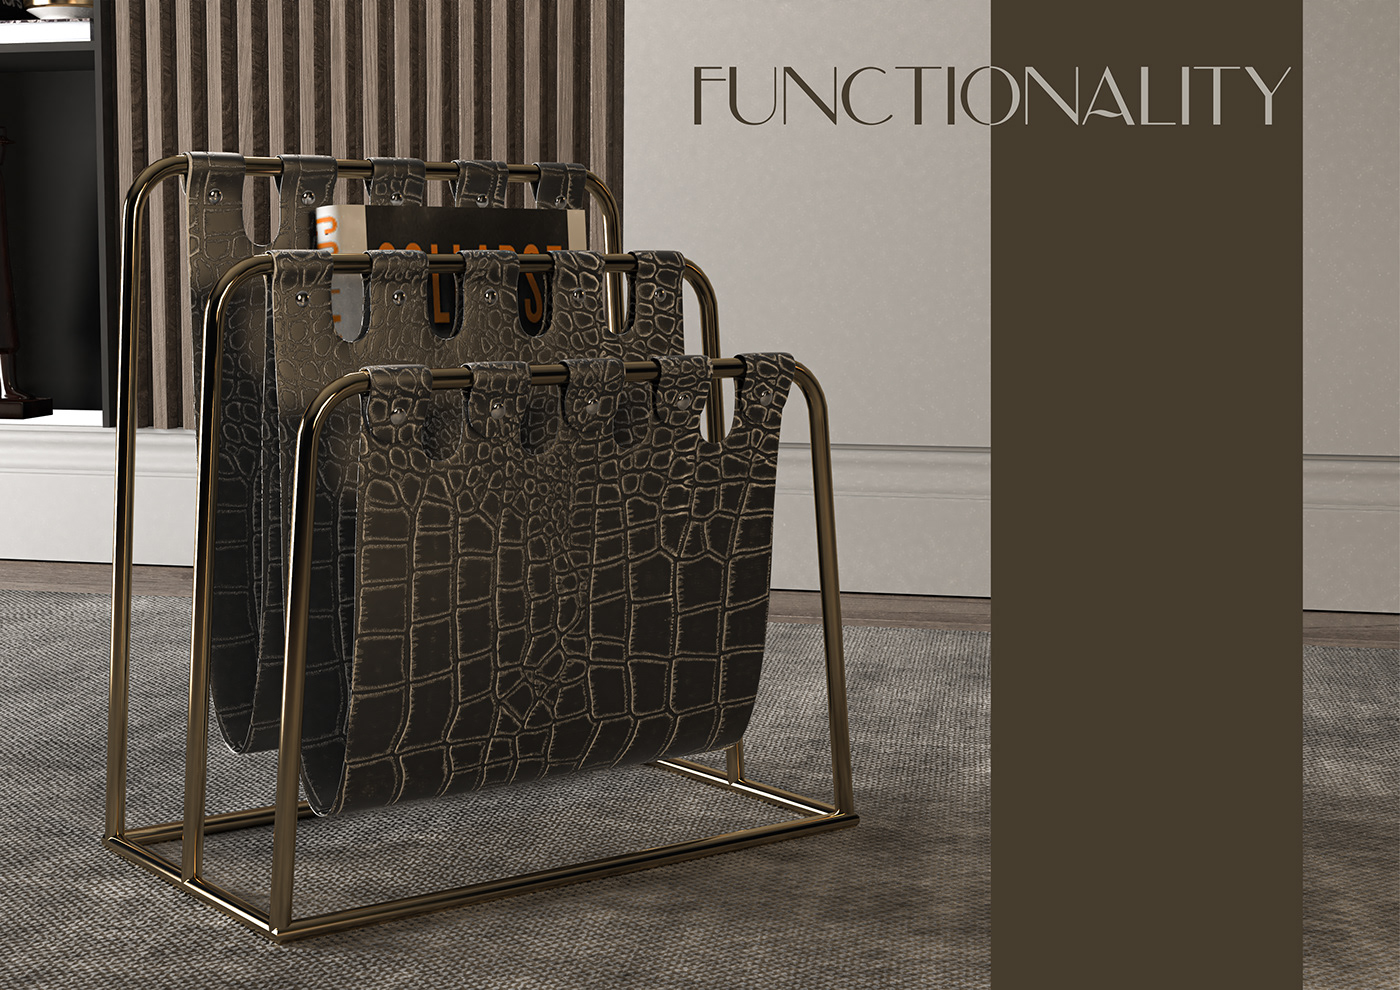 furniture art nouveau Functionality arts and crafts bauhaus design dejstil